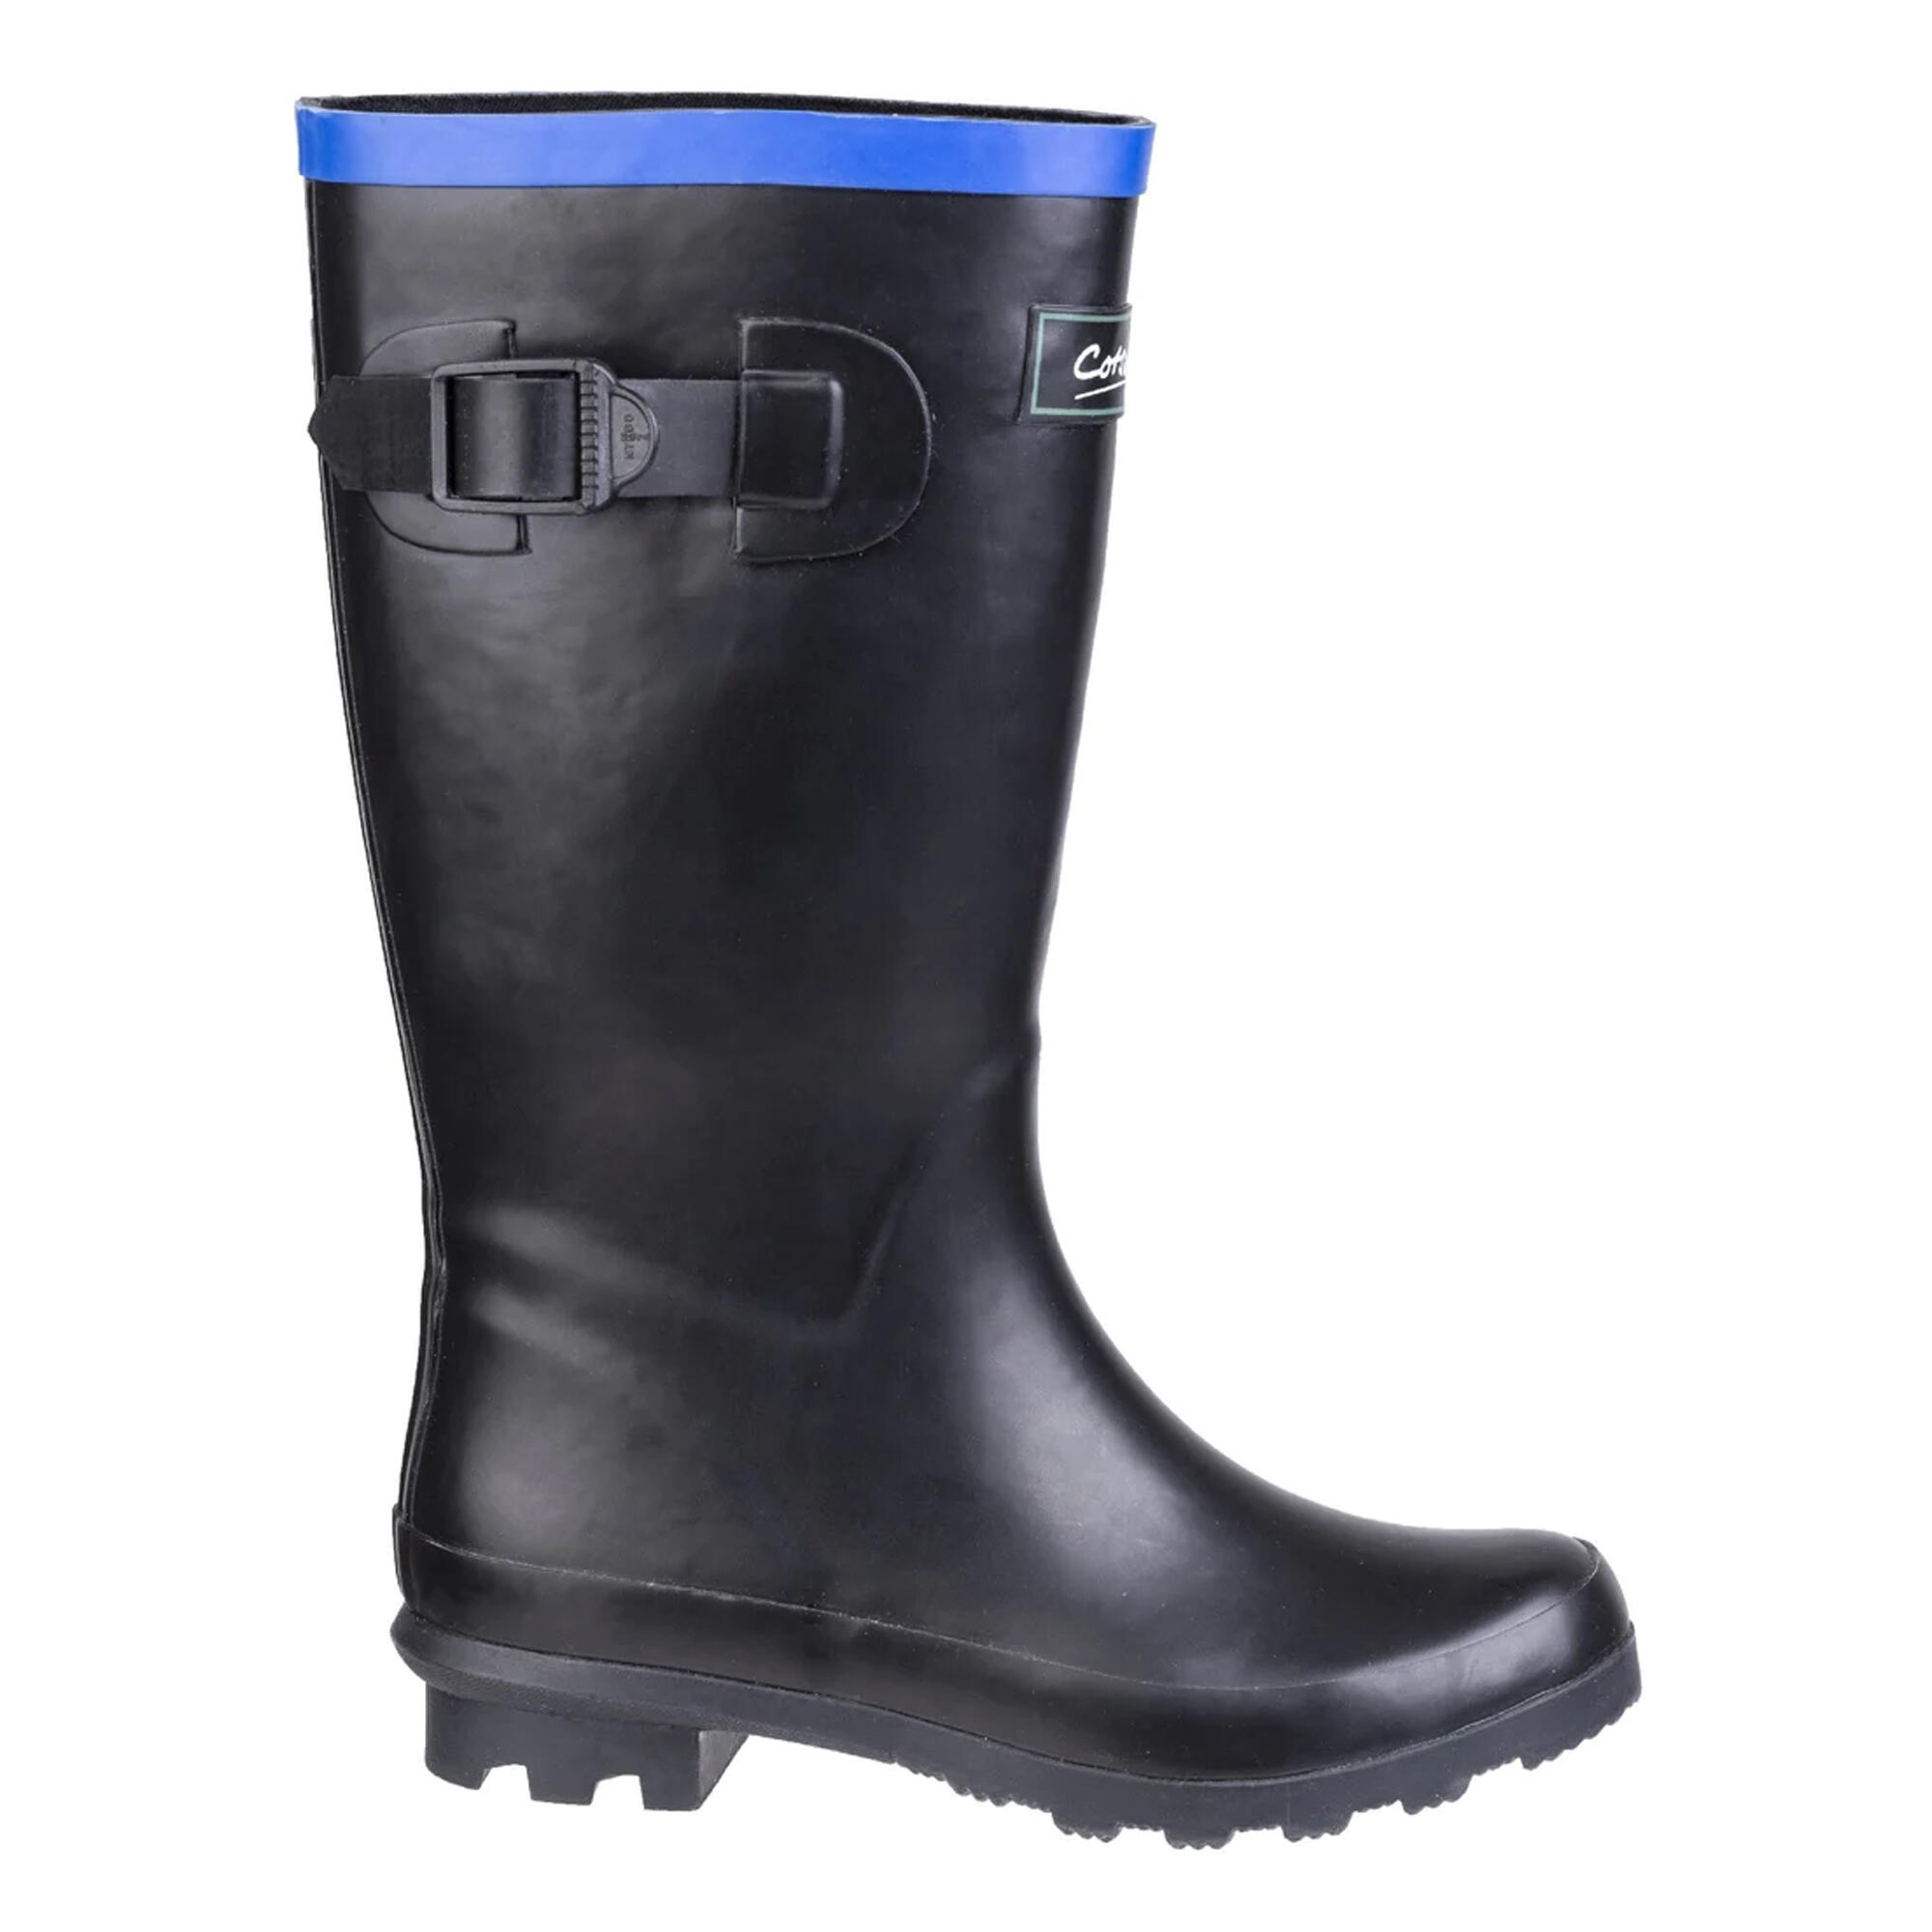 Fairweather Junior Wellington Boot (Black/Blue) 3/5